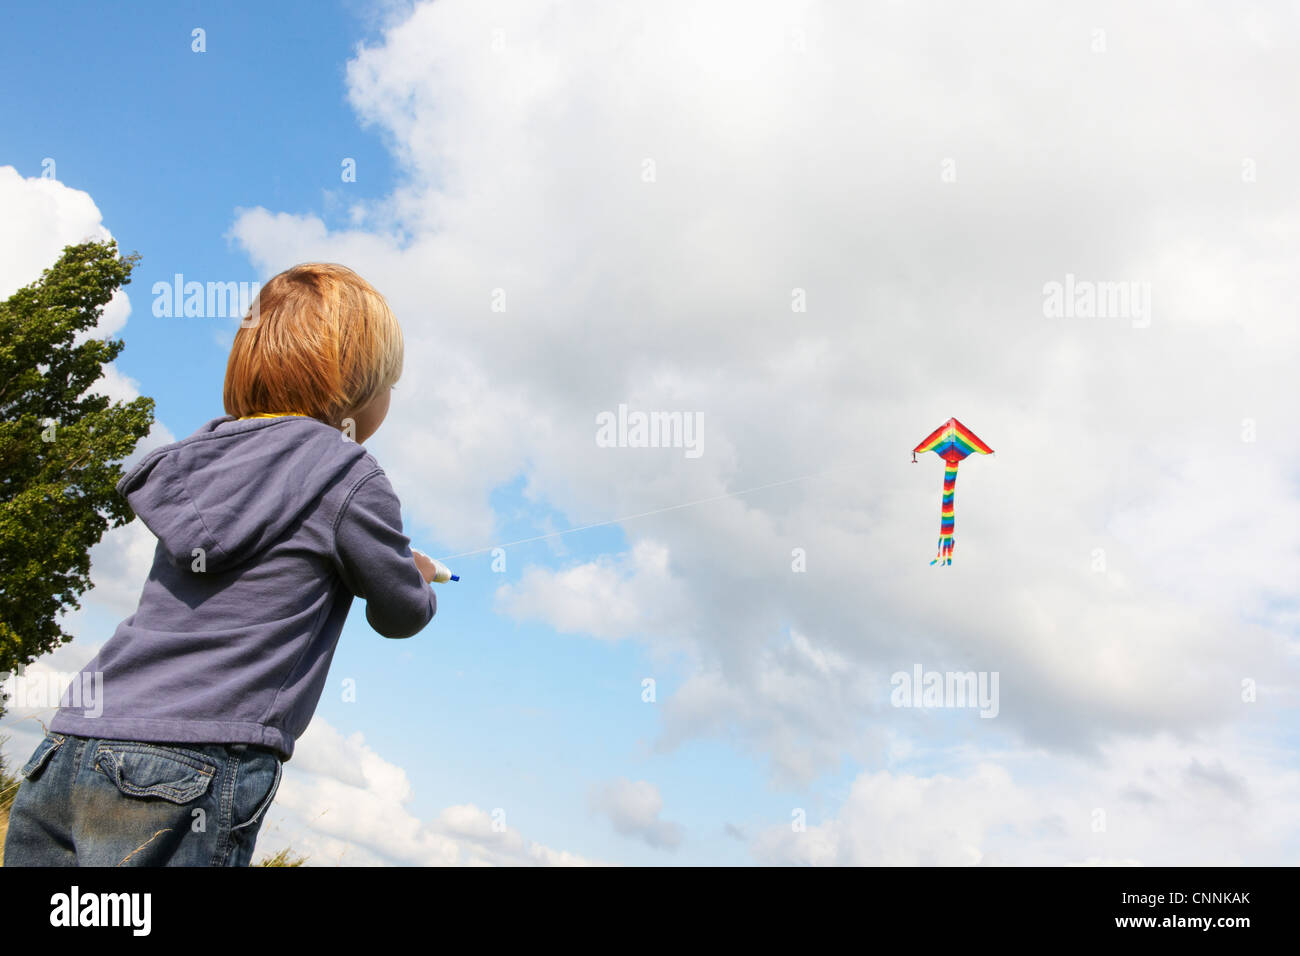 Boy flying kite en plein air Banque D'Images